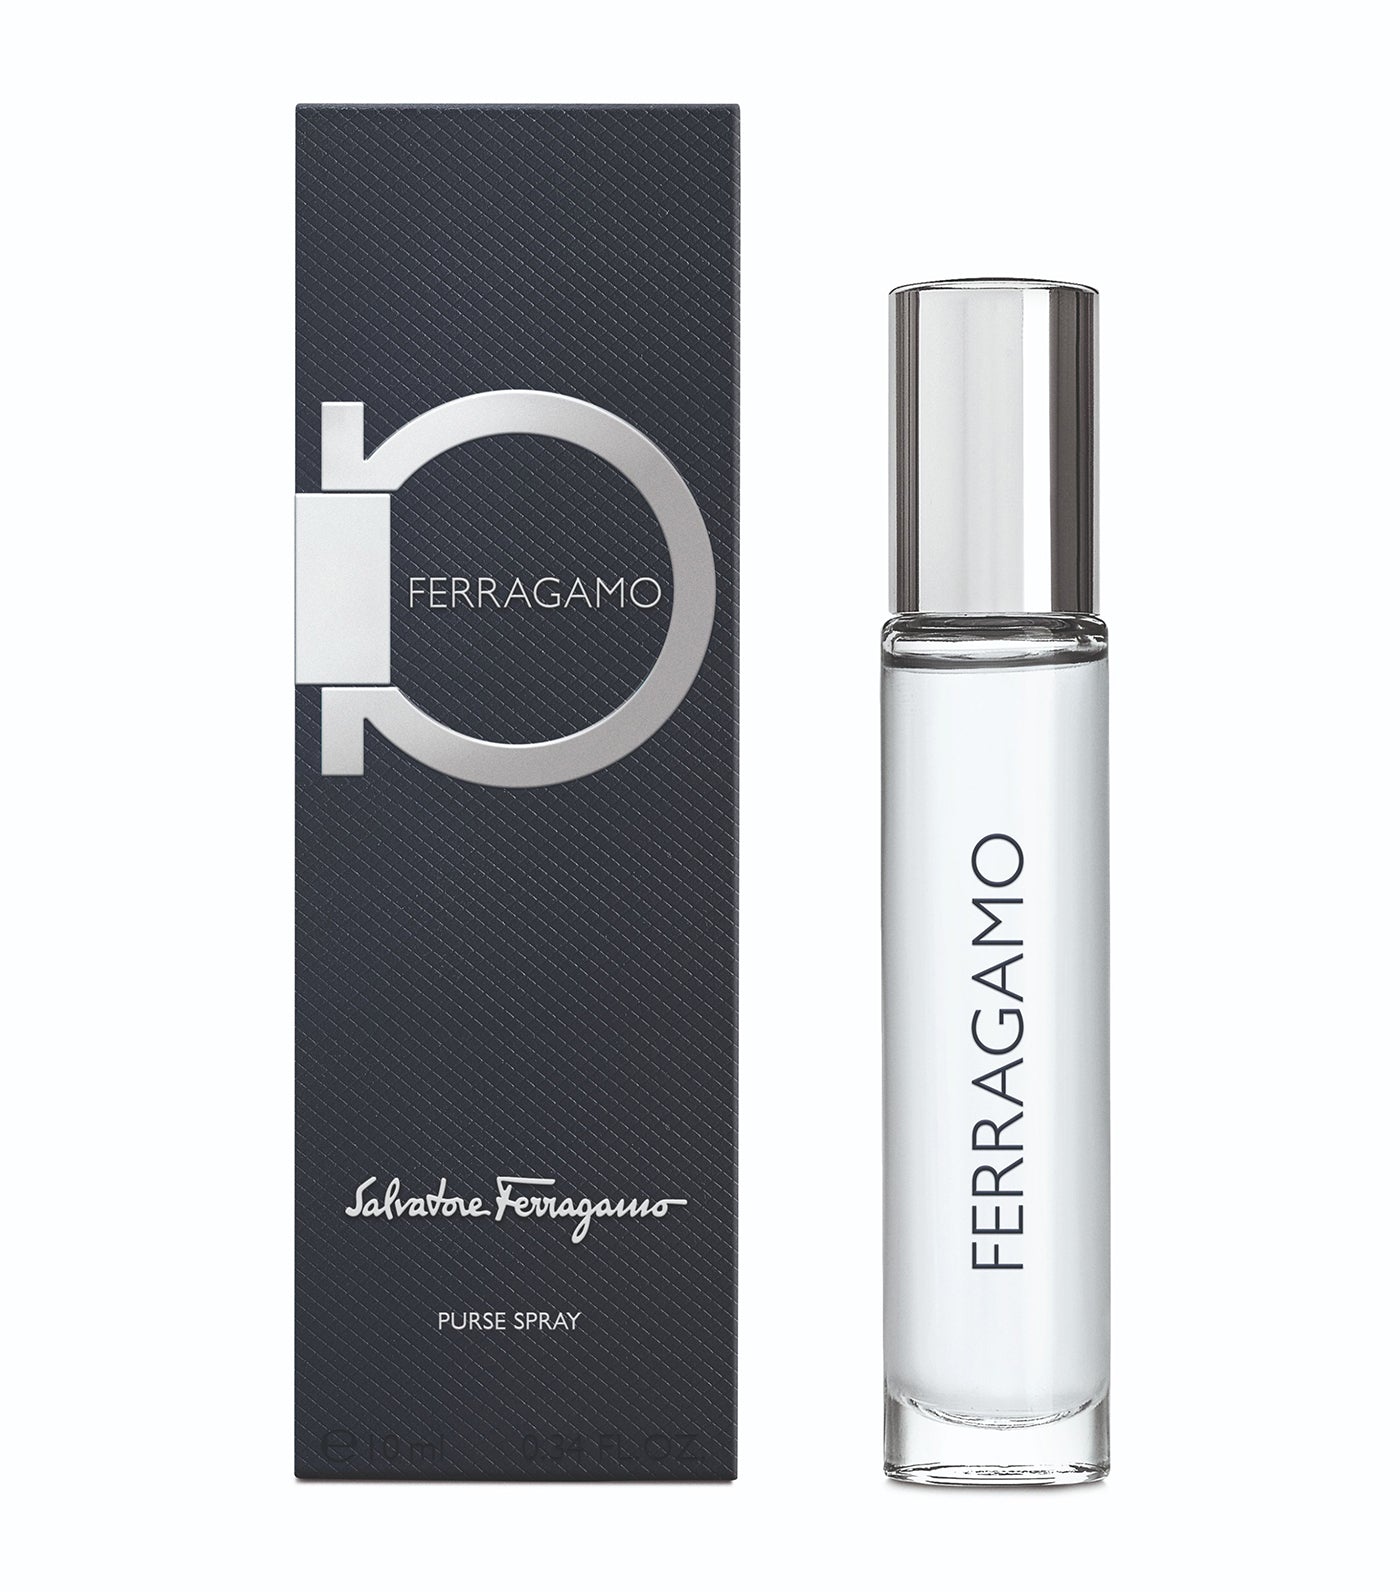 Free 10ML FERRAGAMO Eau de Toilette Purse Spray by Ferragamo